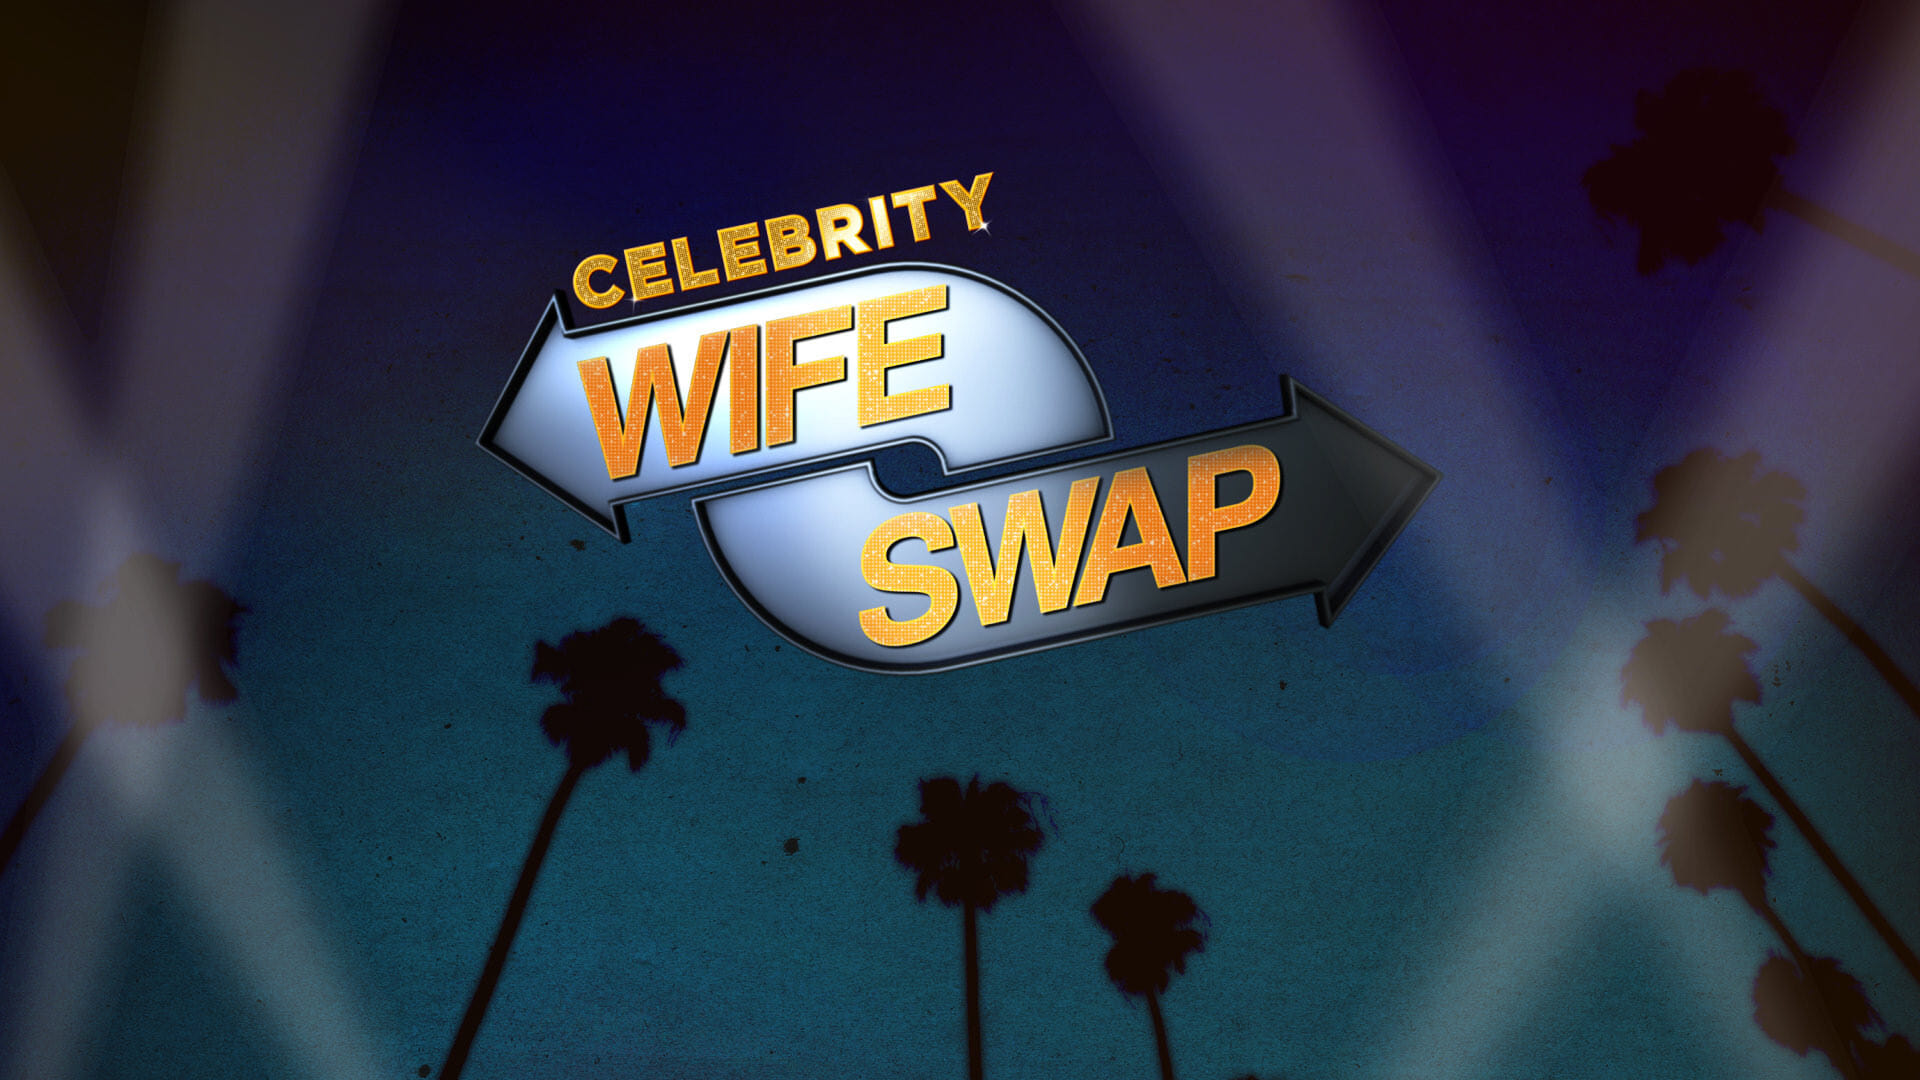 Celebrity Wife Swap (US)